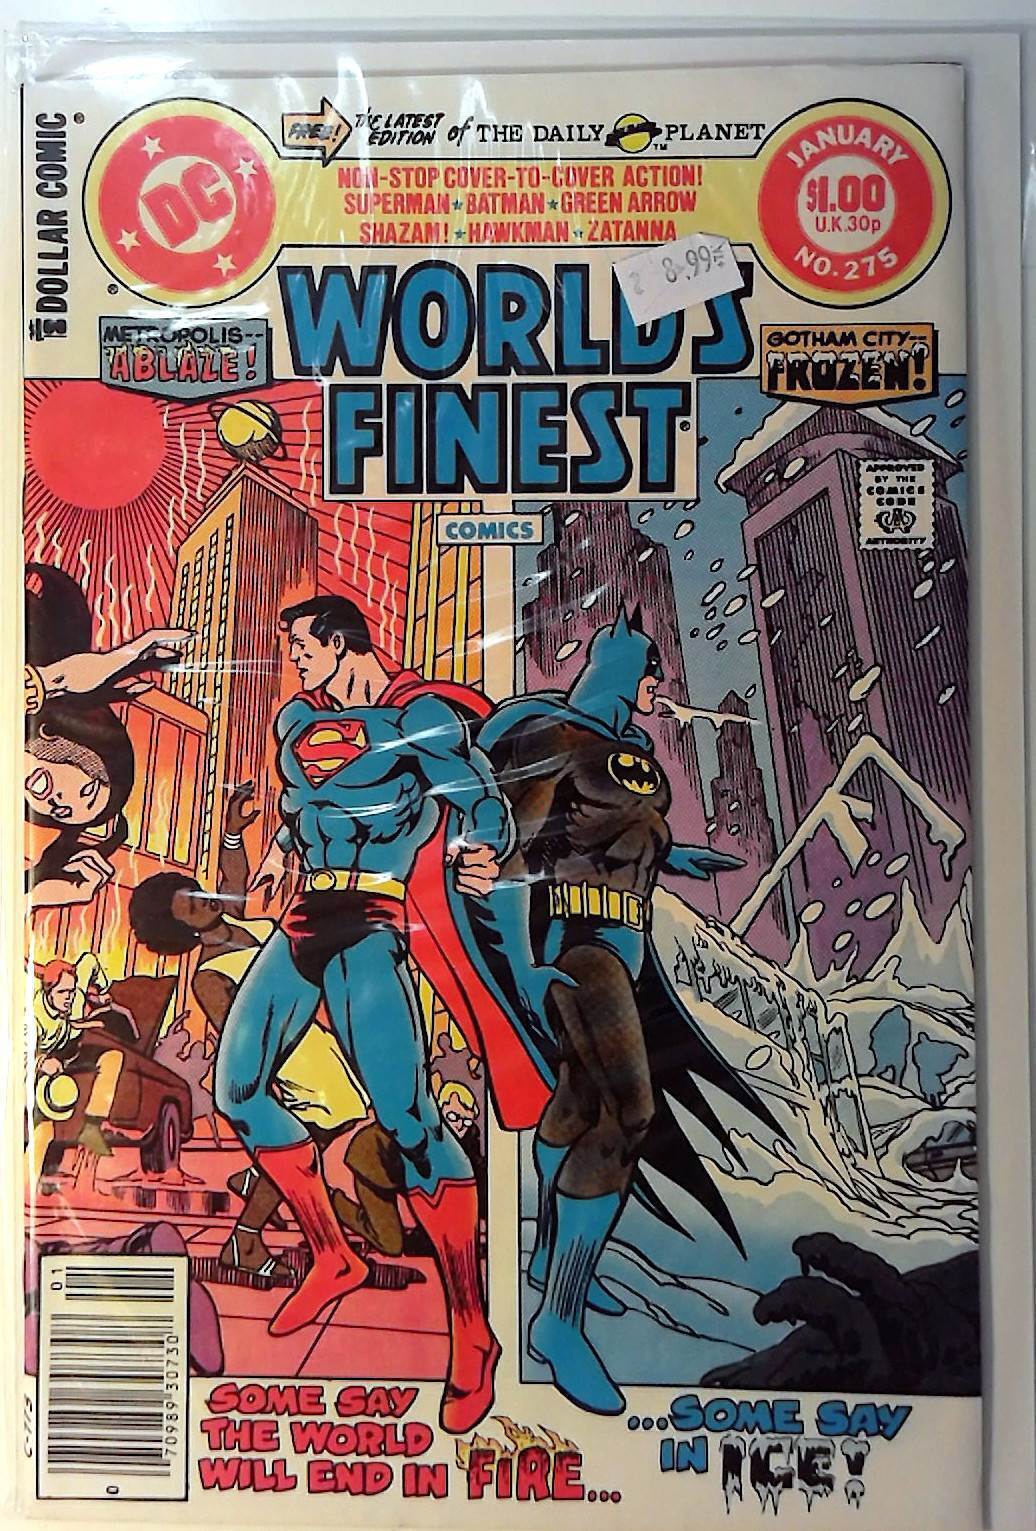 World's Finest Comics #275 DC Comics (1982) Newsstand Superman Batman Comic Book